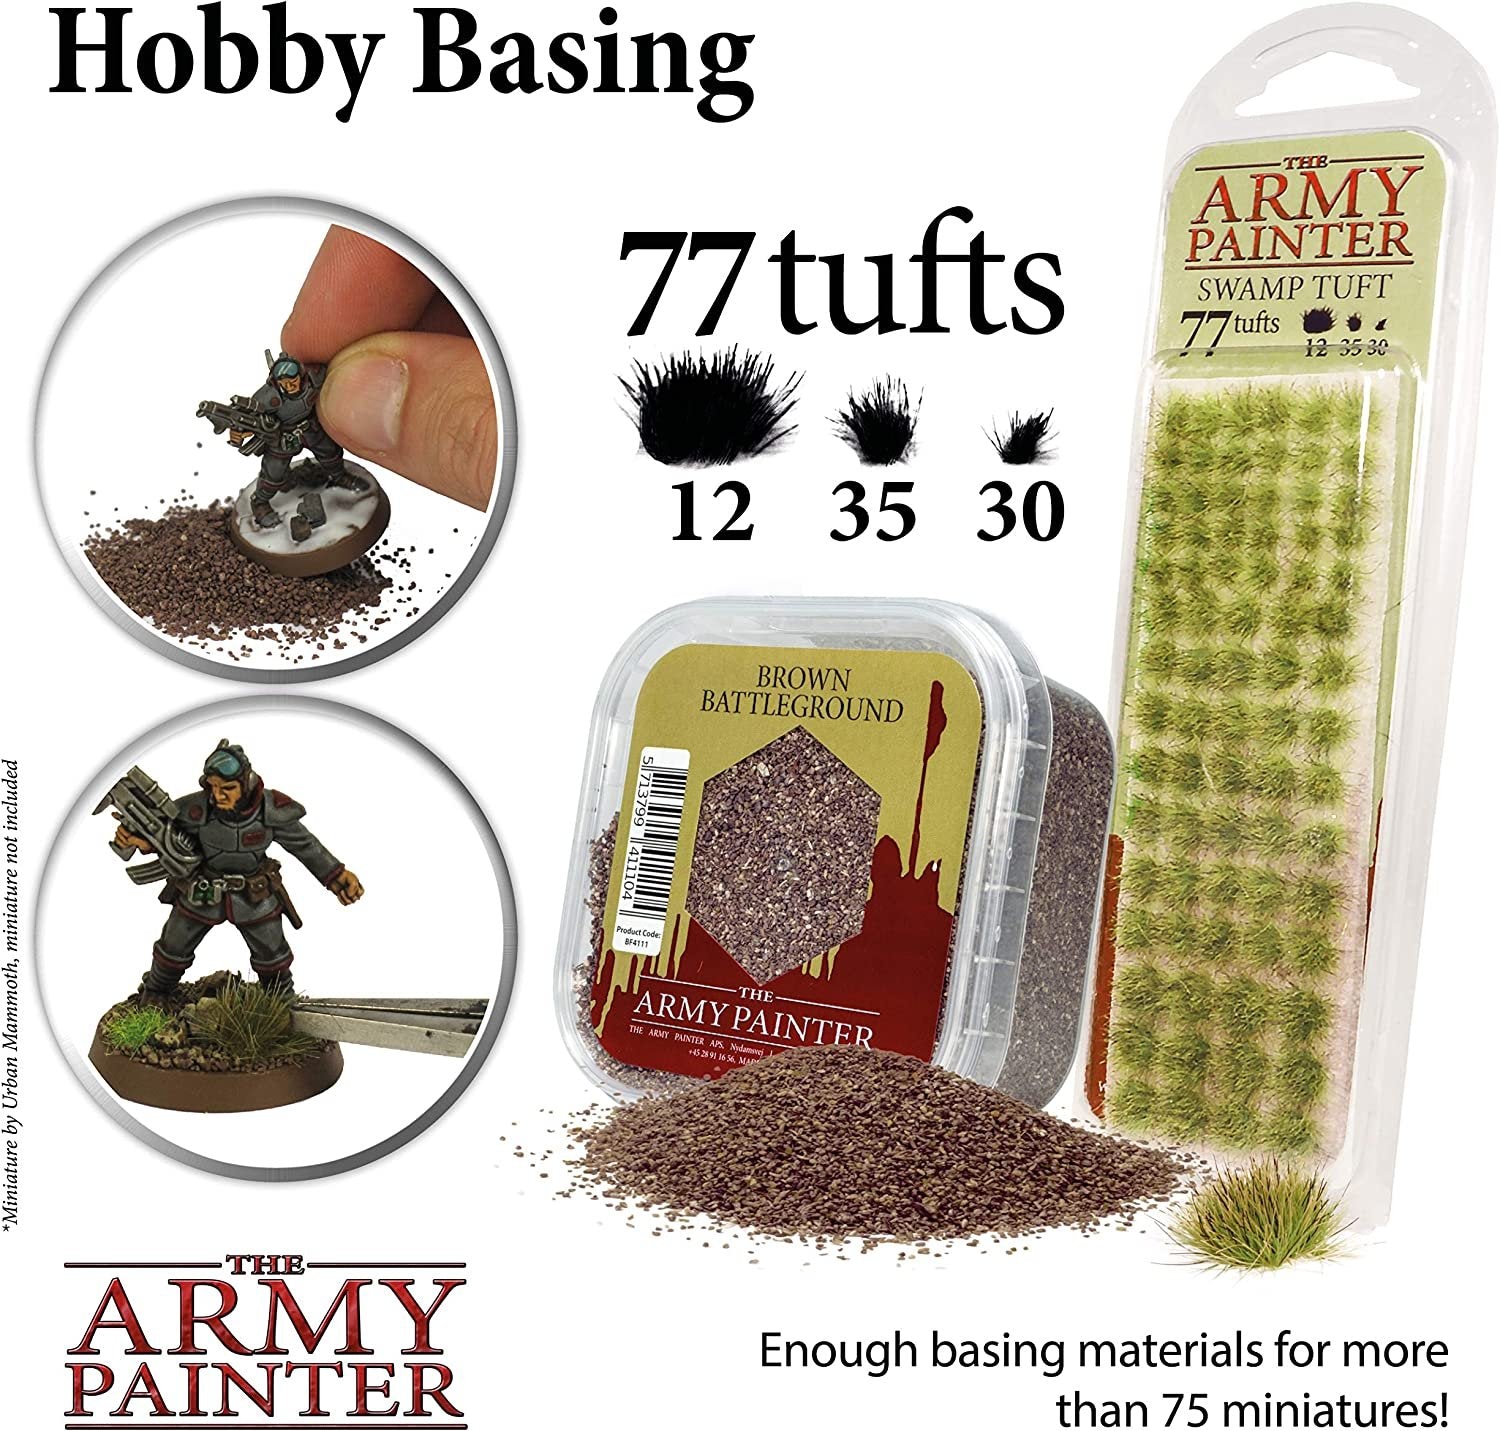 Army Painter: Battlefields Basing Set - Table Top Miniatures